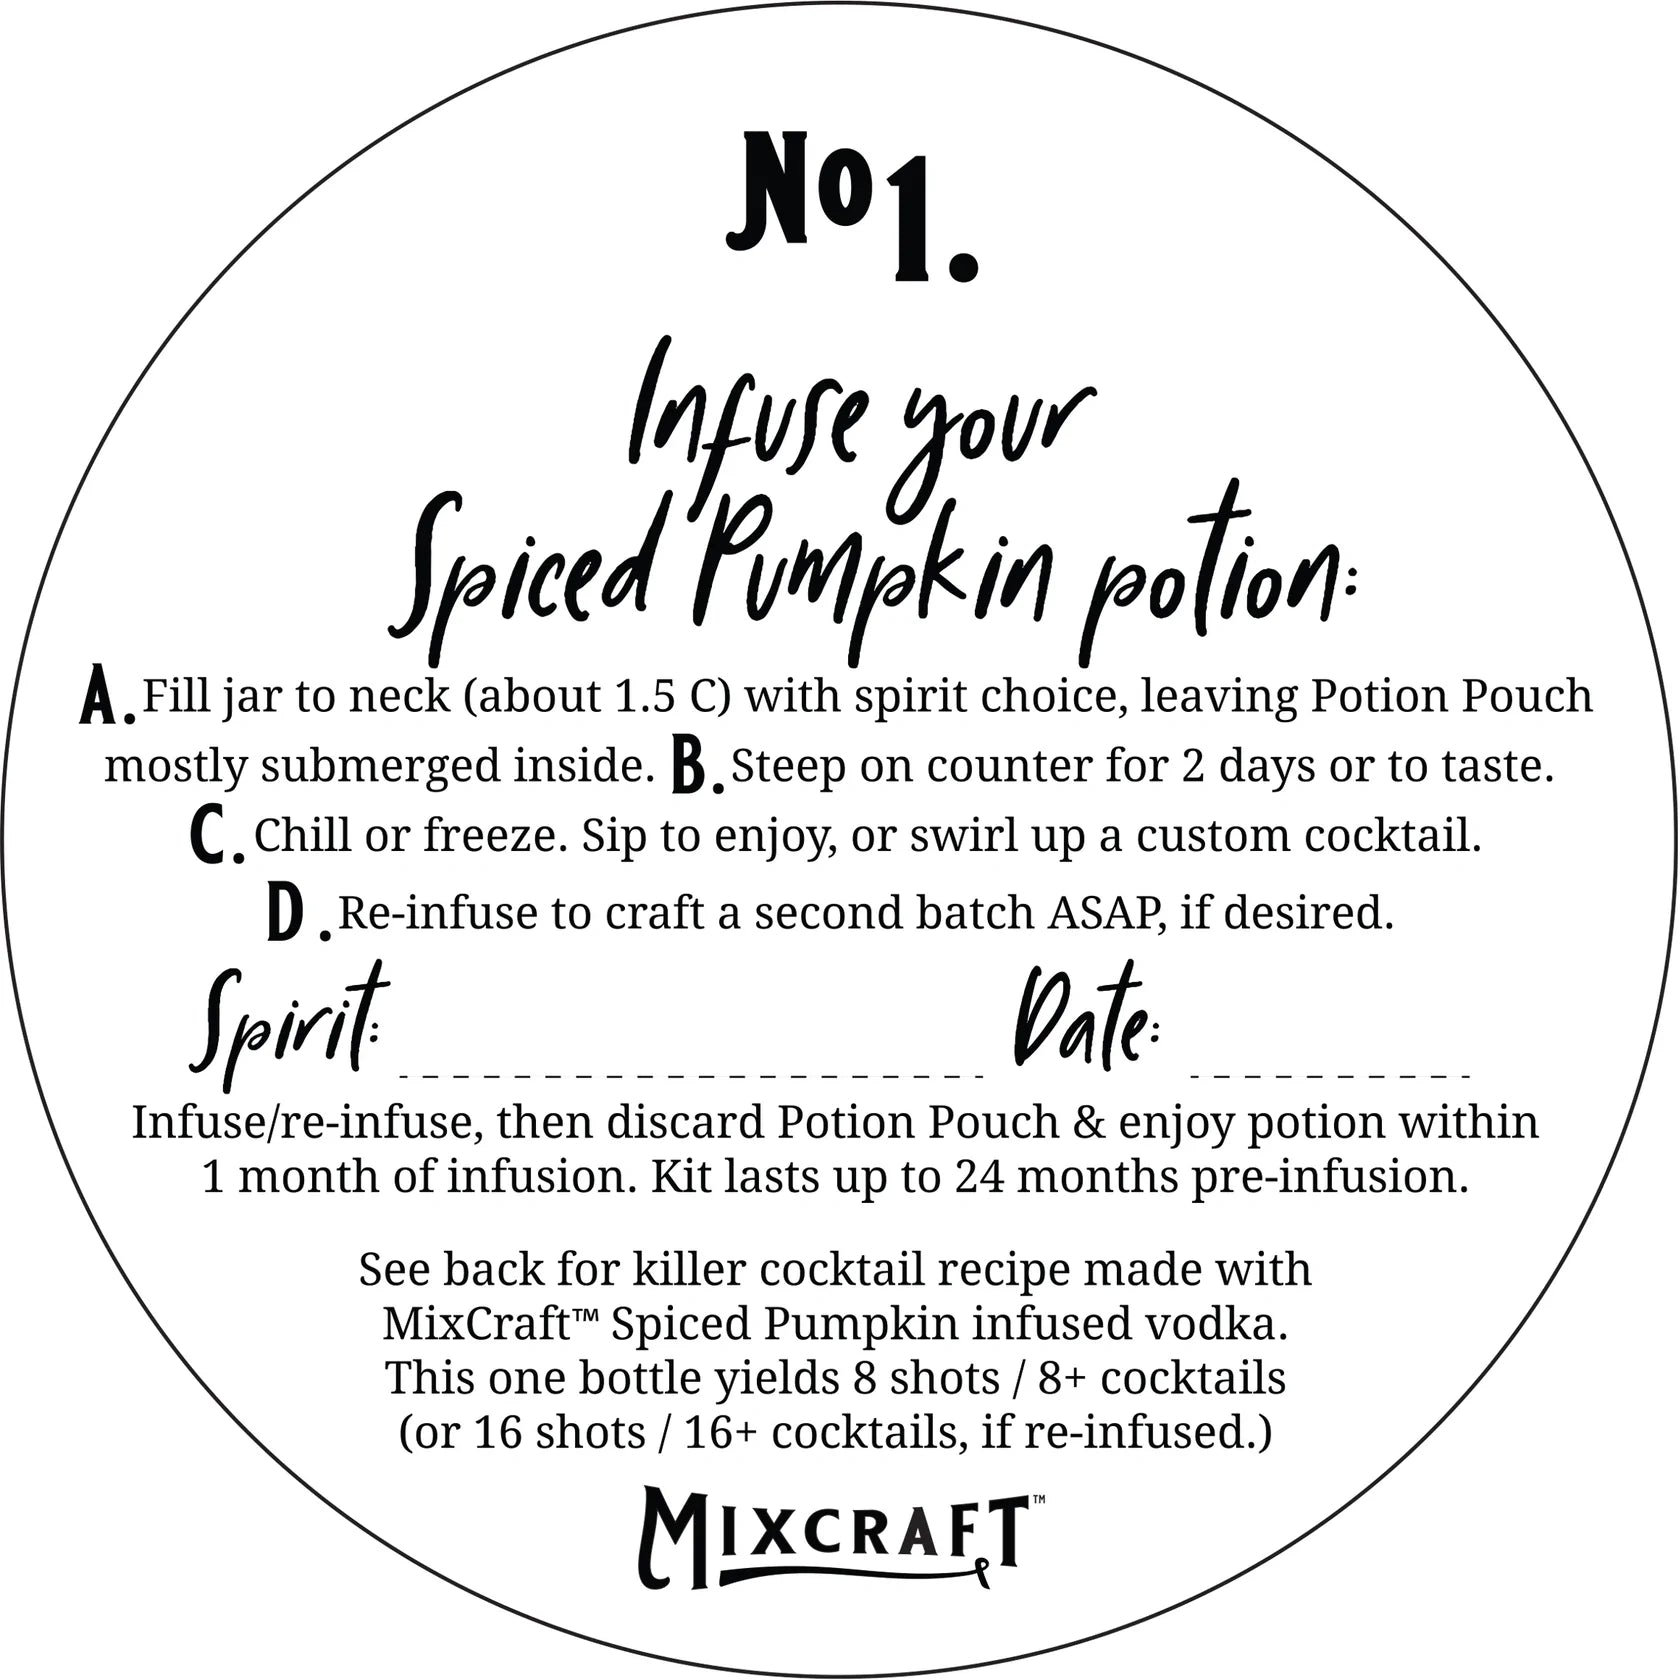 Spiced Pumpkin Spirit Infusion Kit